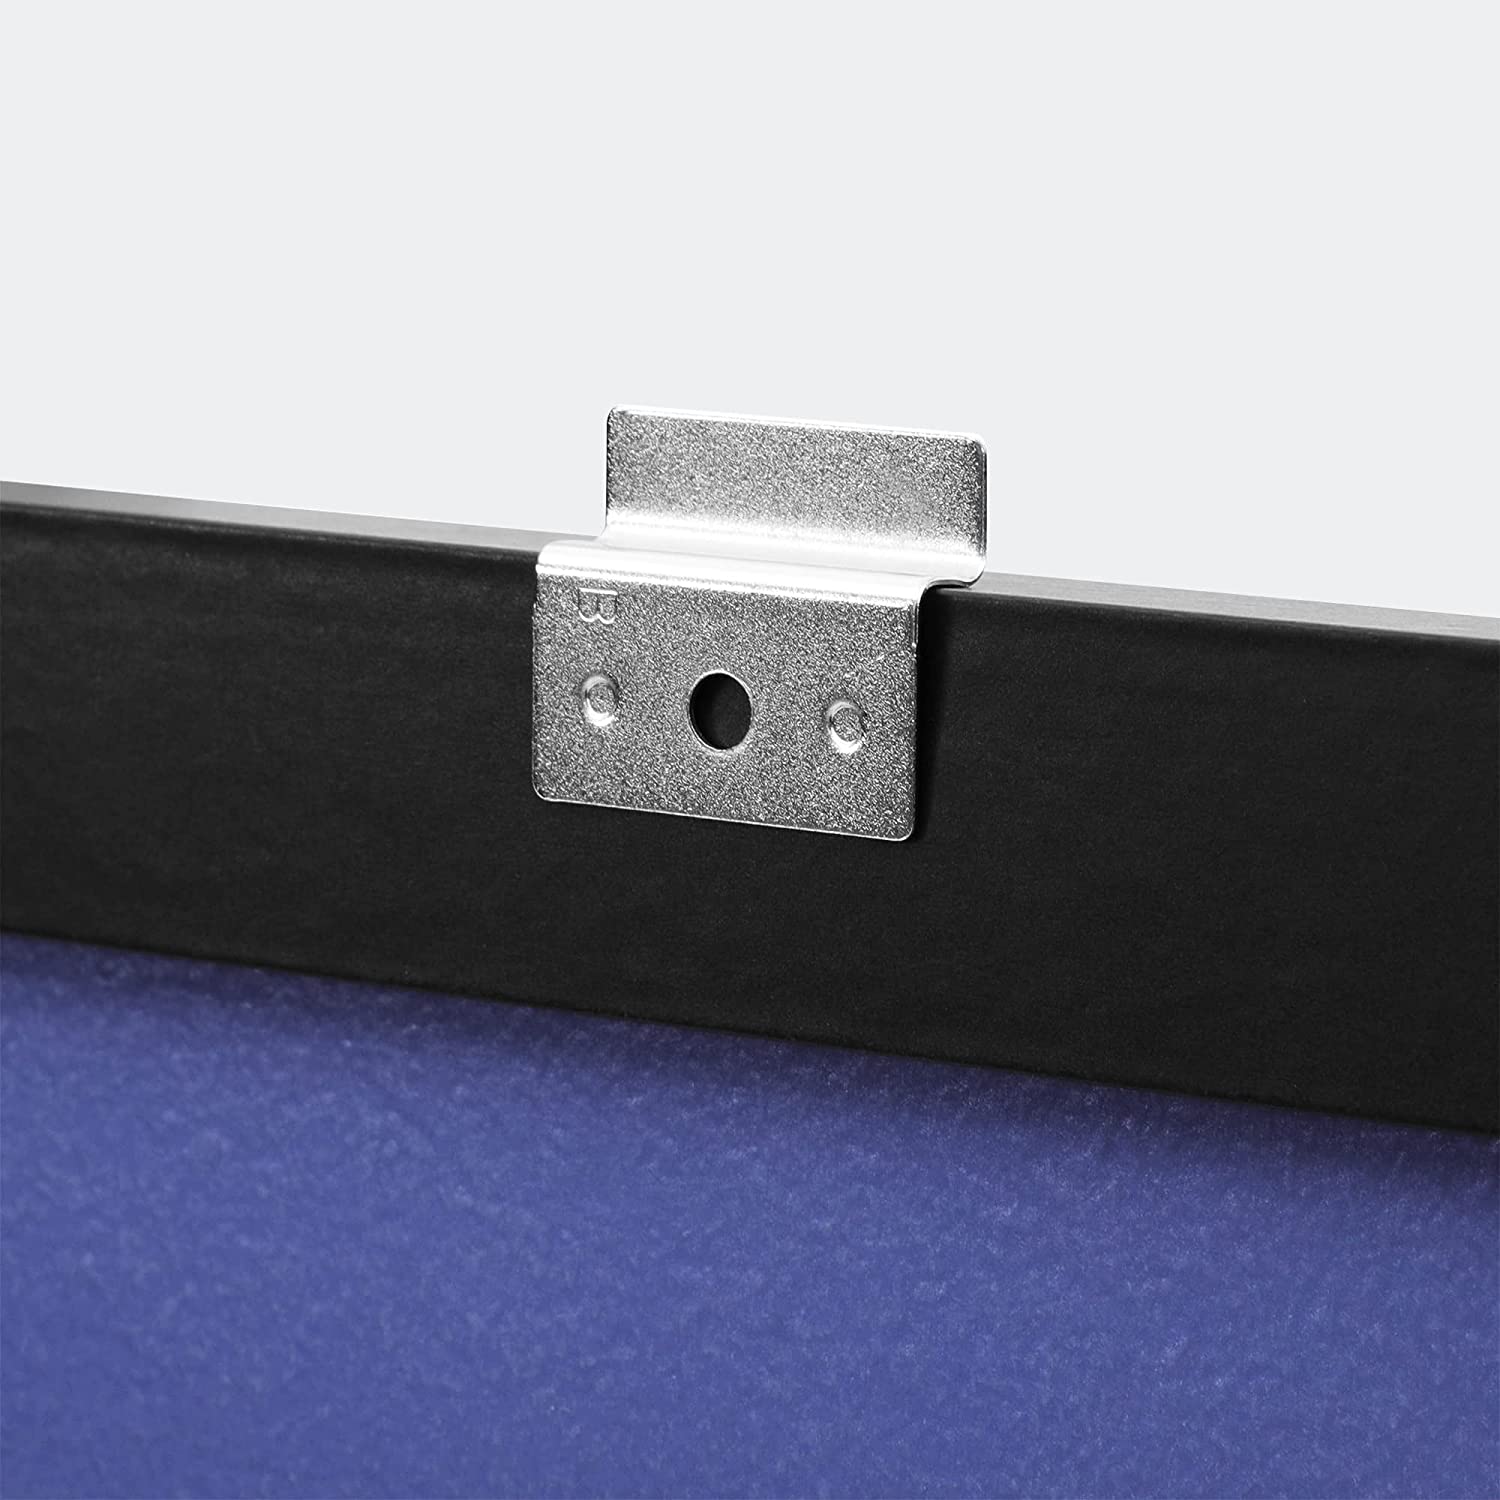 Pen + Gear Magnetic Dry Erase Whiteboard, 35'' x 23'', Black Wooden Frame - image 5 of 8